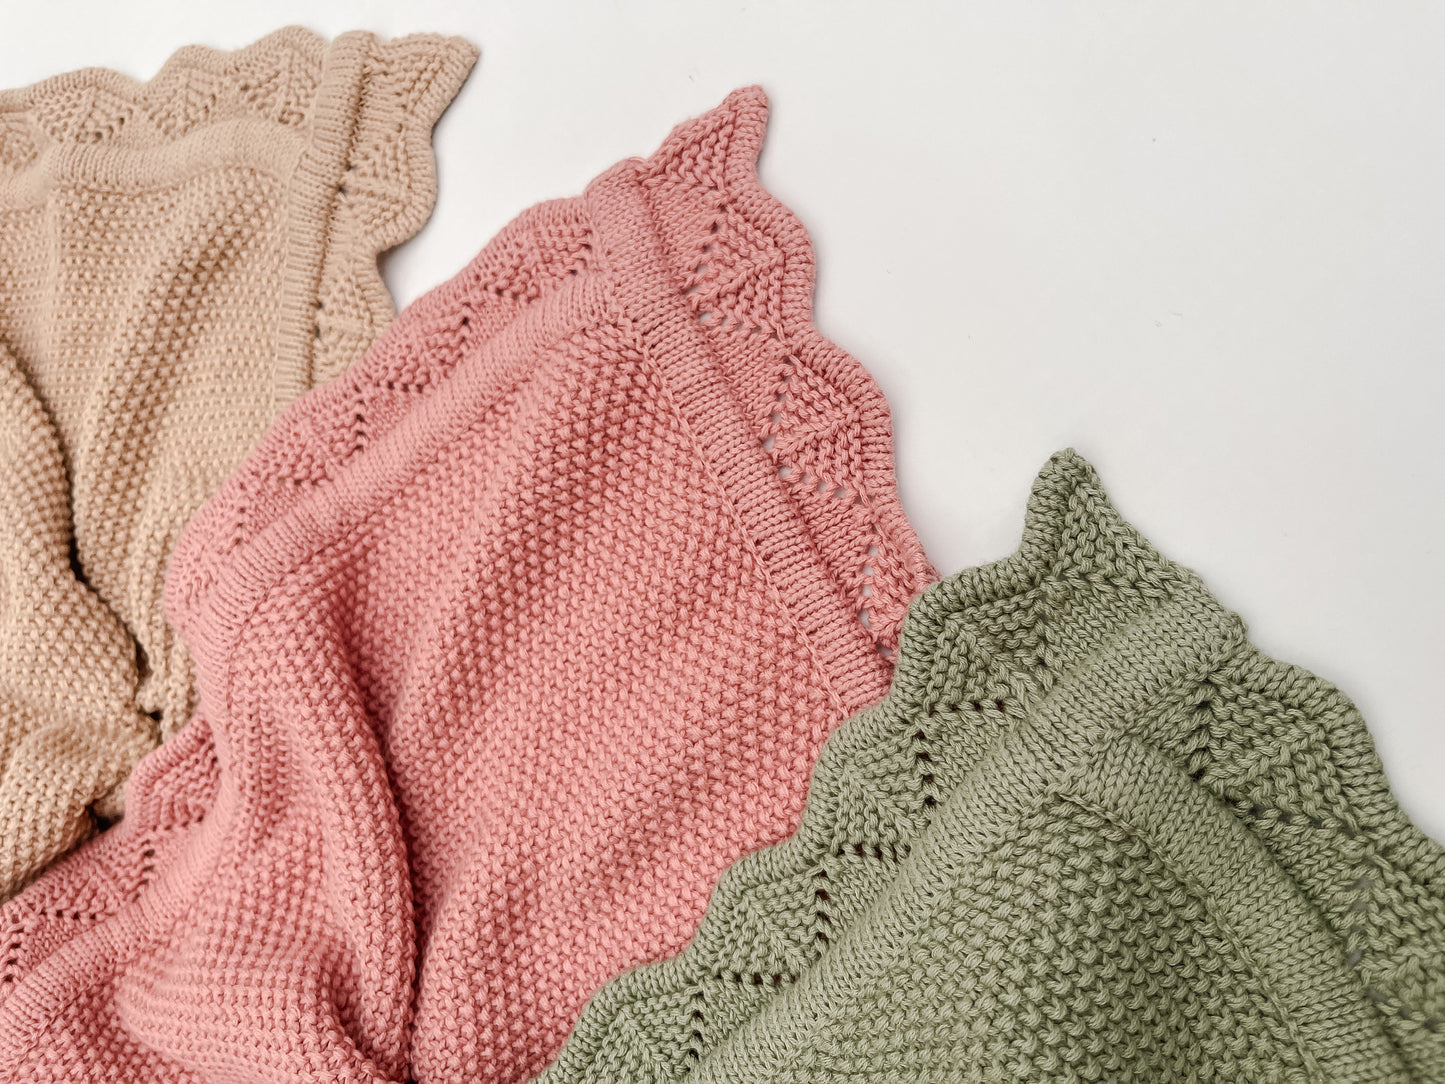 Moss Knitted Blanket